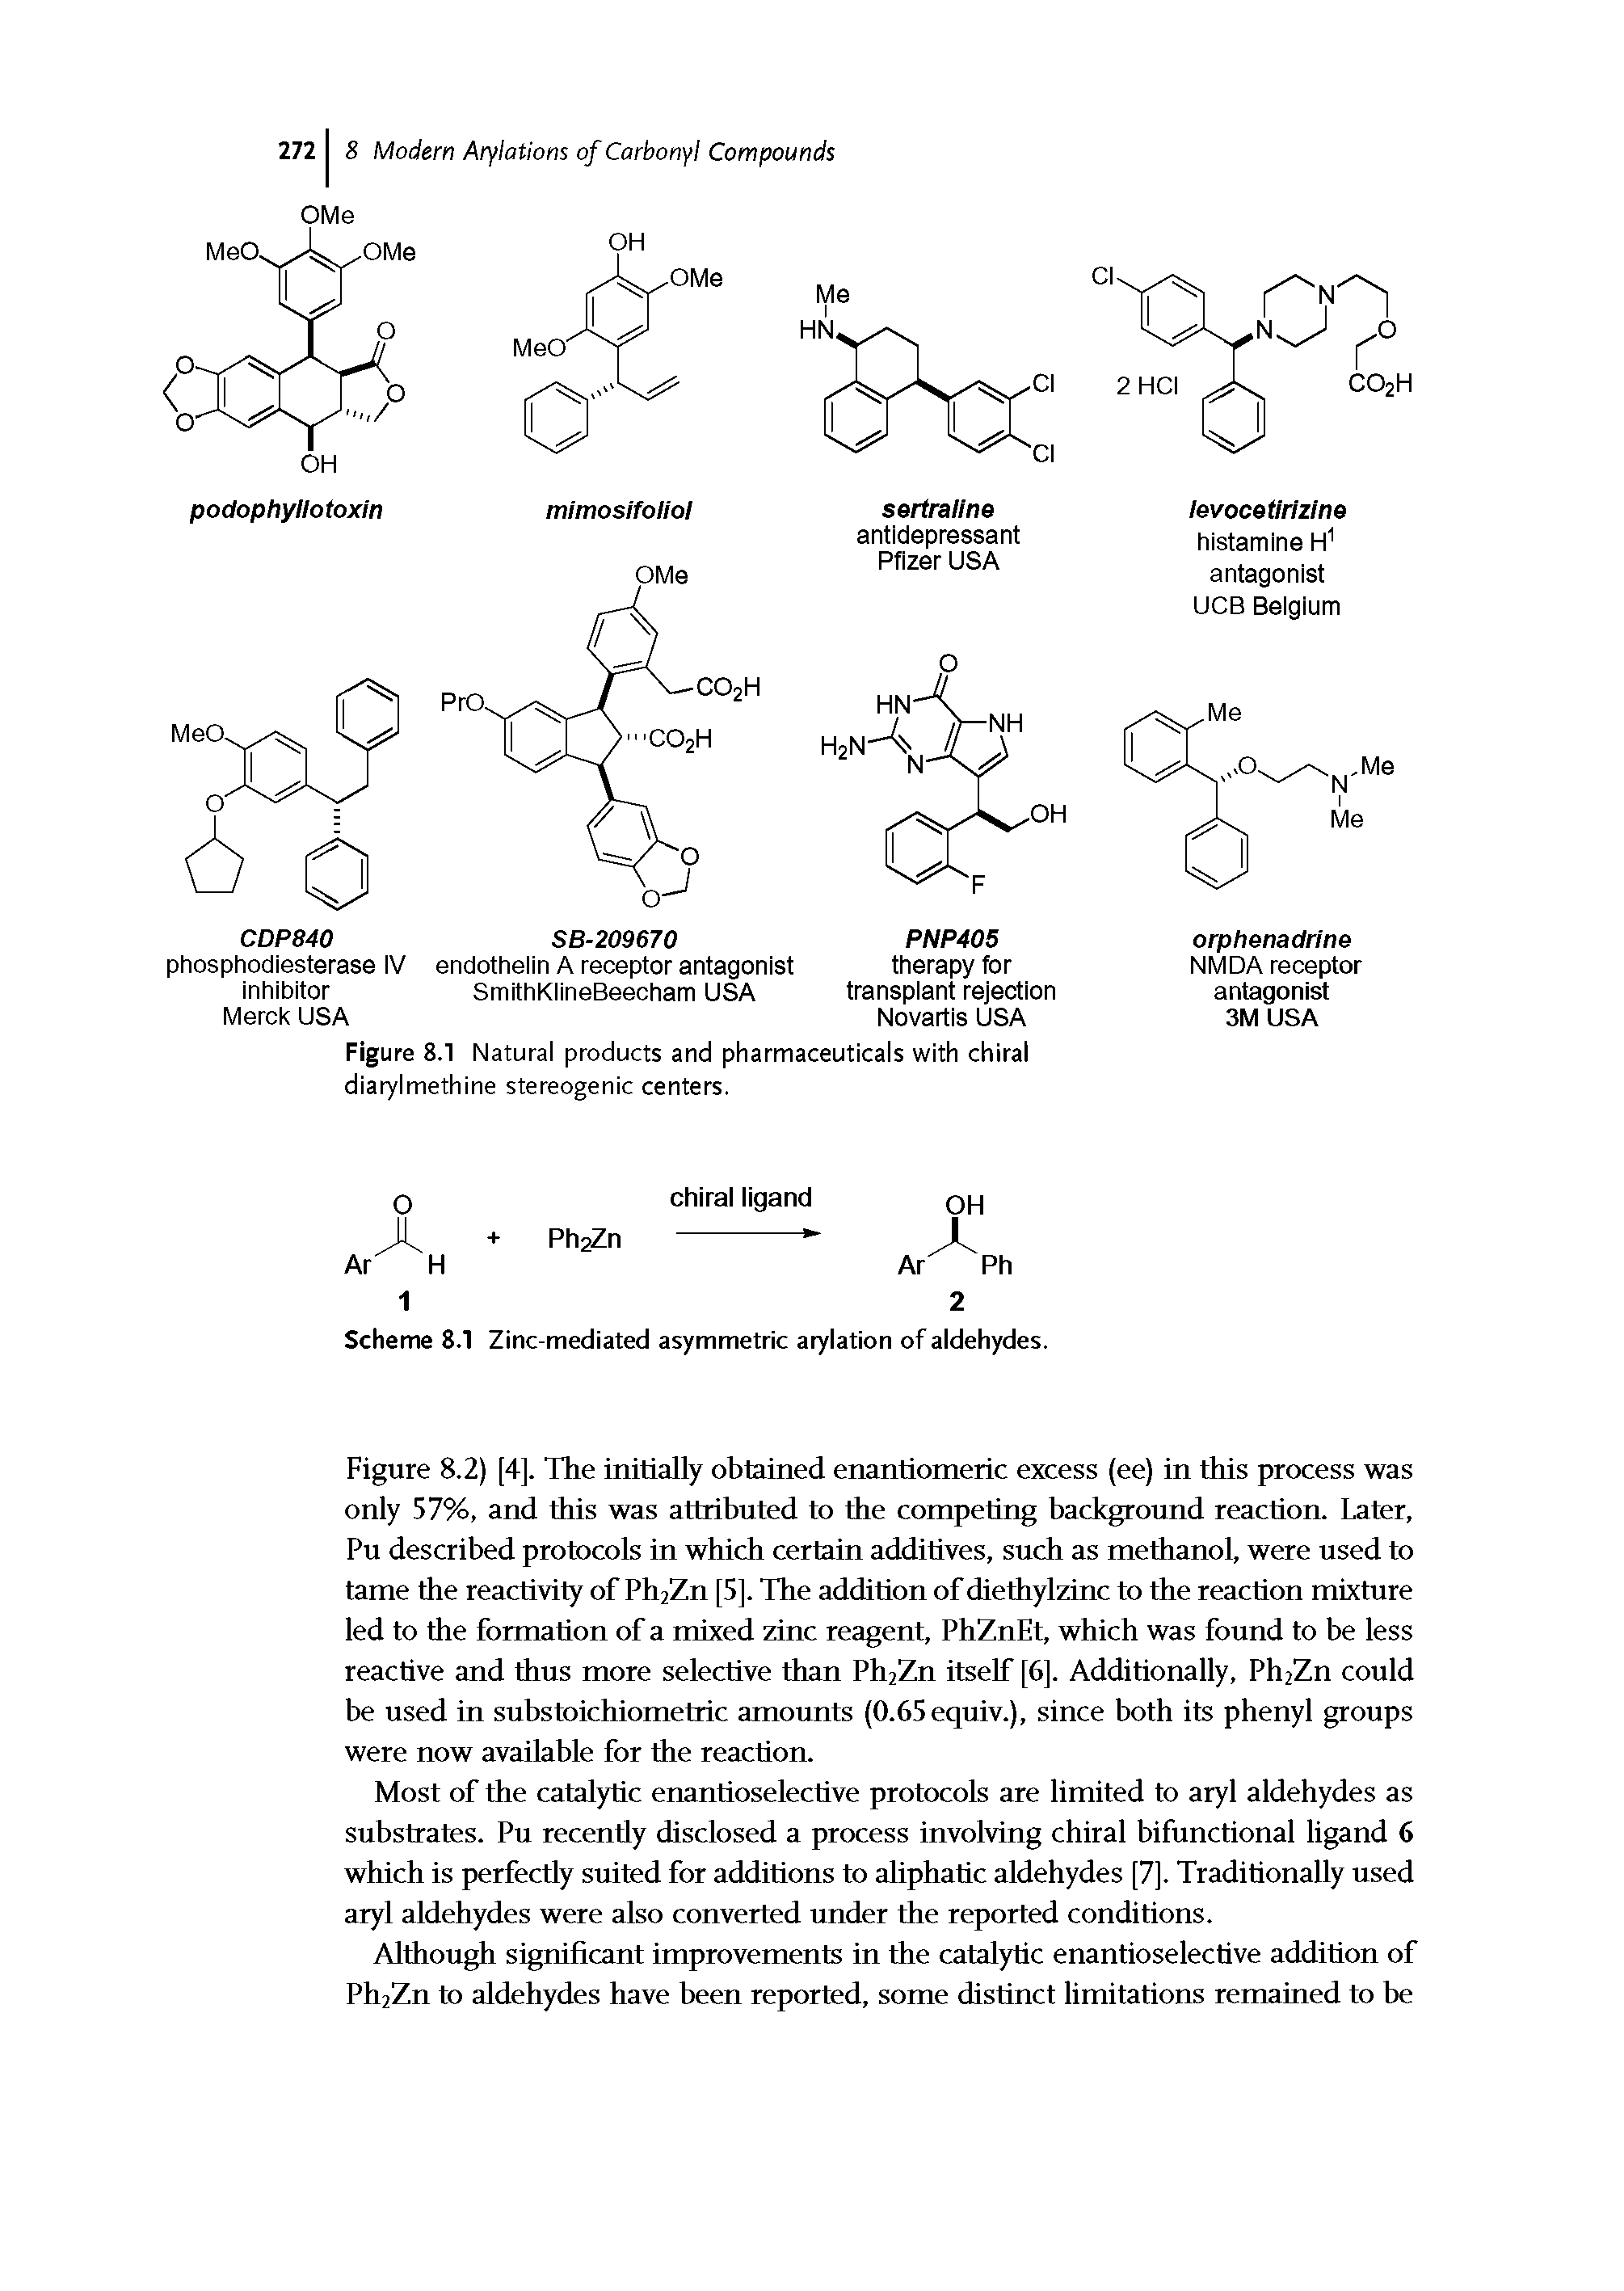 Scheme 8.1 Zinc-mediated asymmetric arylation of aldehydes.